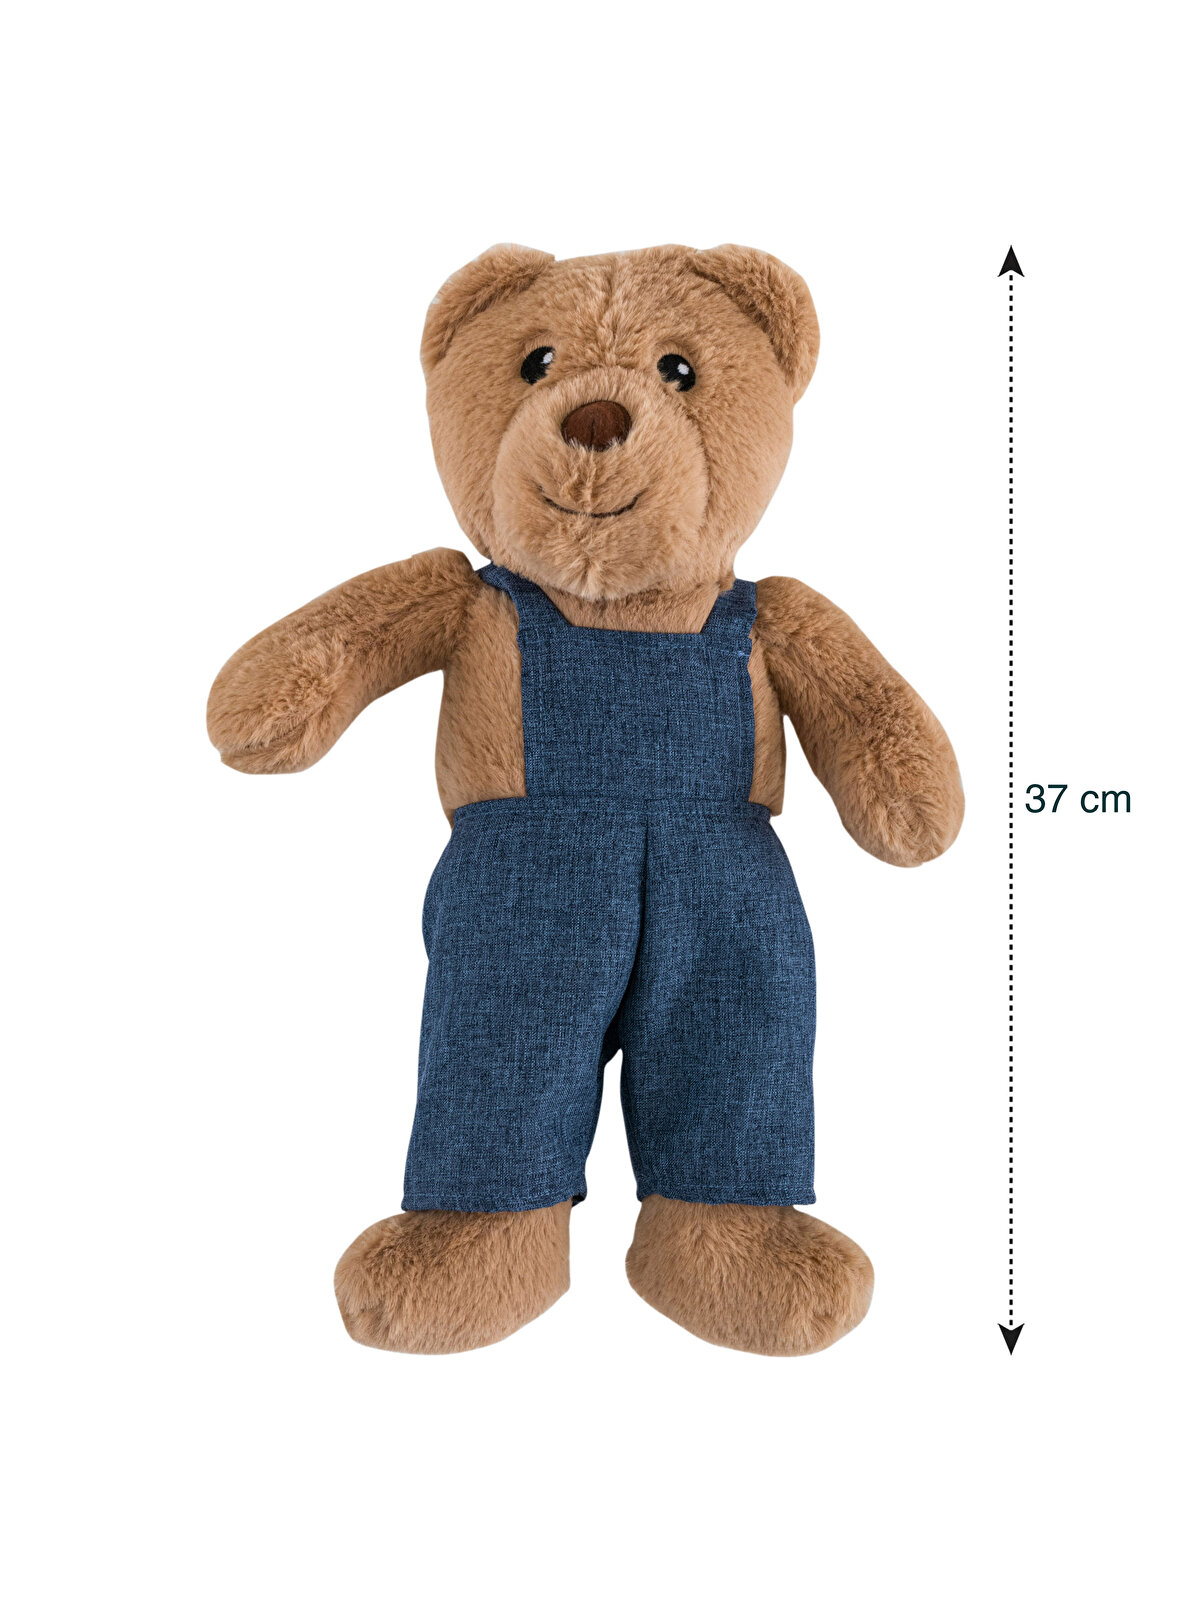 TAPIS TEDDY BEAR ENFANT - LIT AIRBEAR COSY KIDZ 114CM X 178CM X 10CM